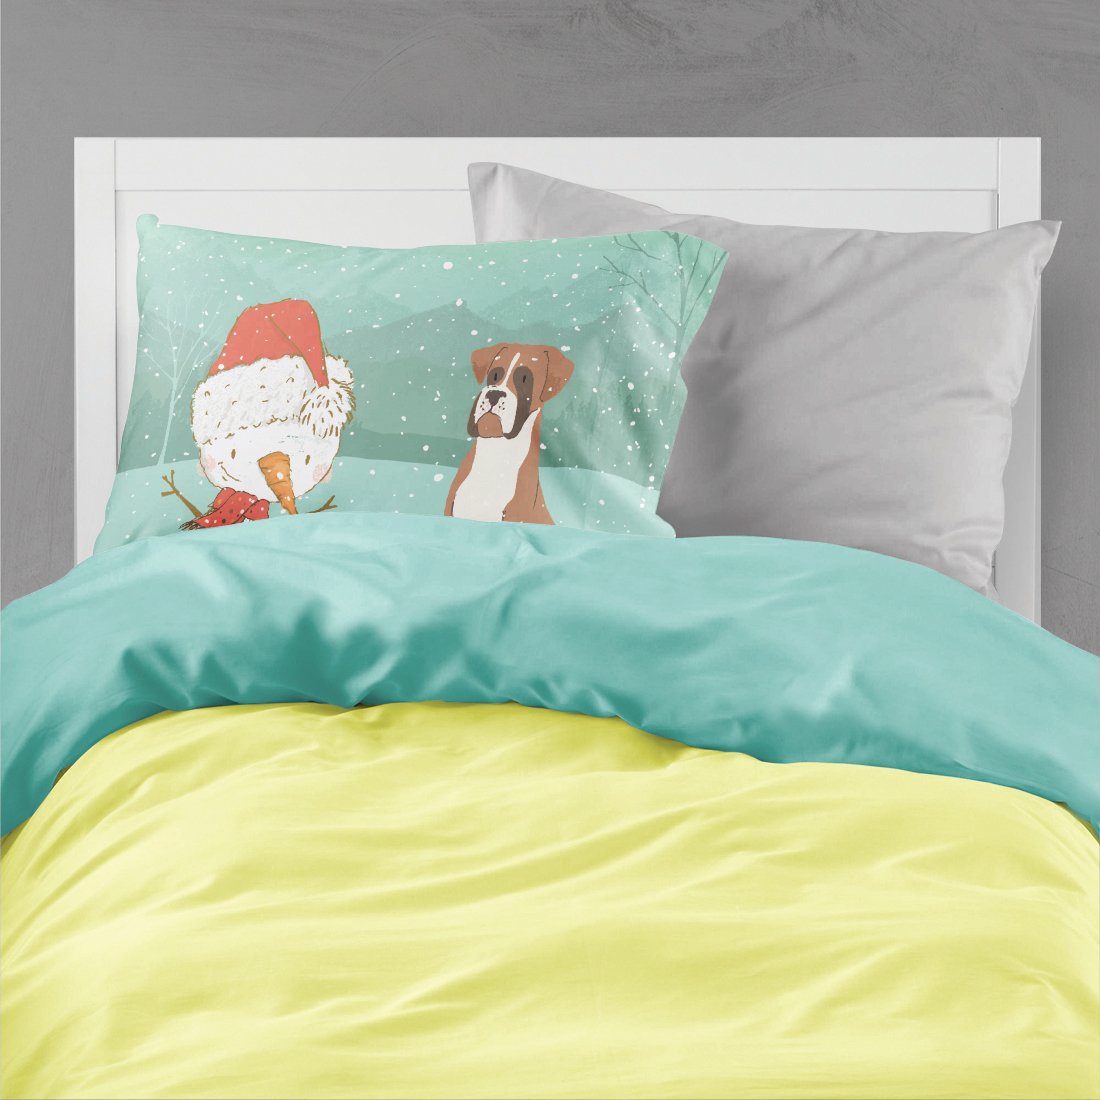 Fawn Boxer and Snowman Christmas Fabric Standard Pillowcase CK2036PILLOWCASE by Caroline's Treasures